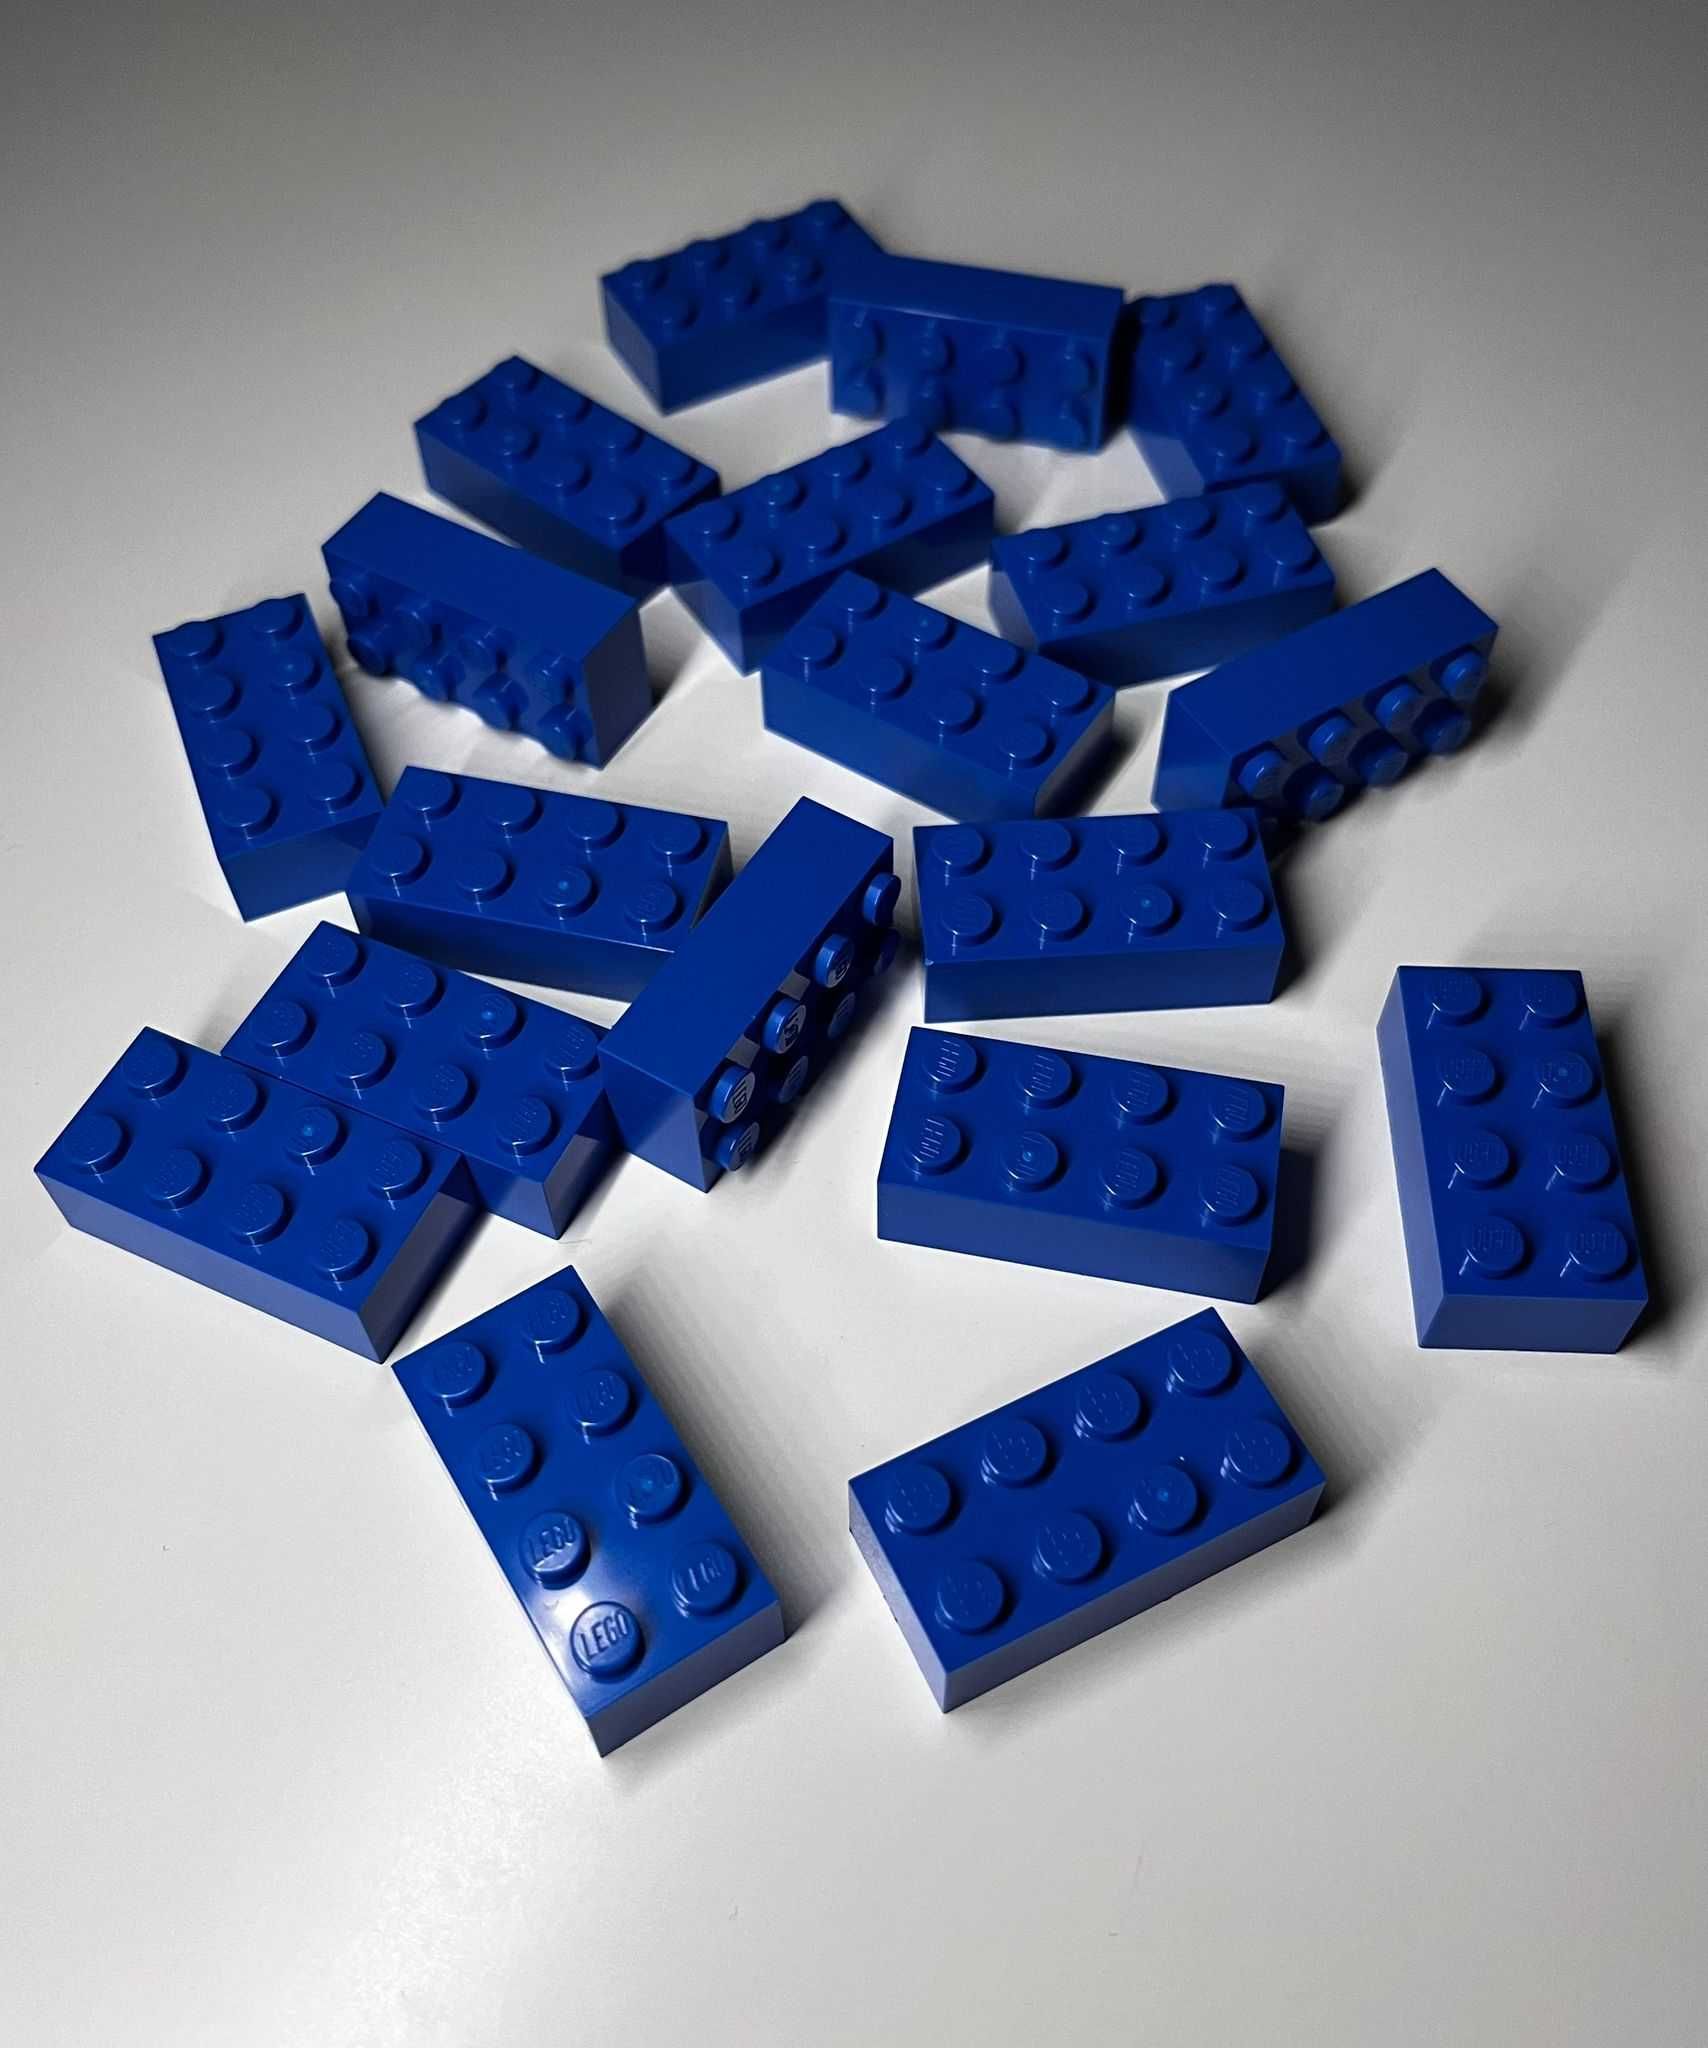 9 x LEGO 3001 Brick 2x4, Blue